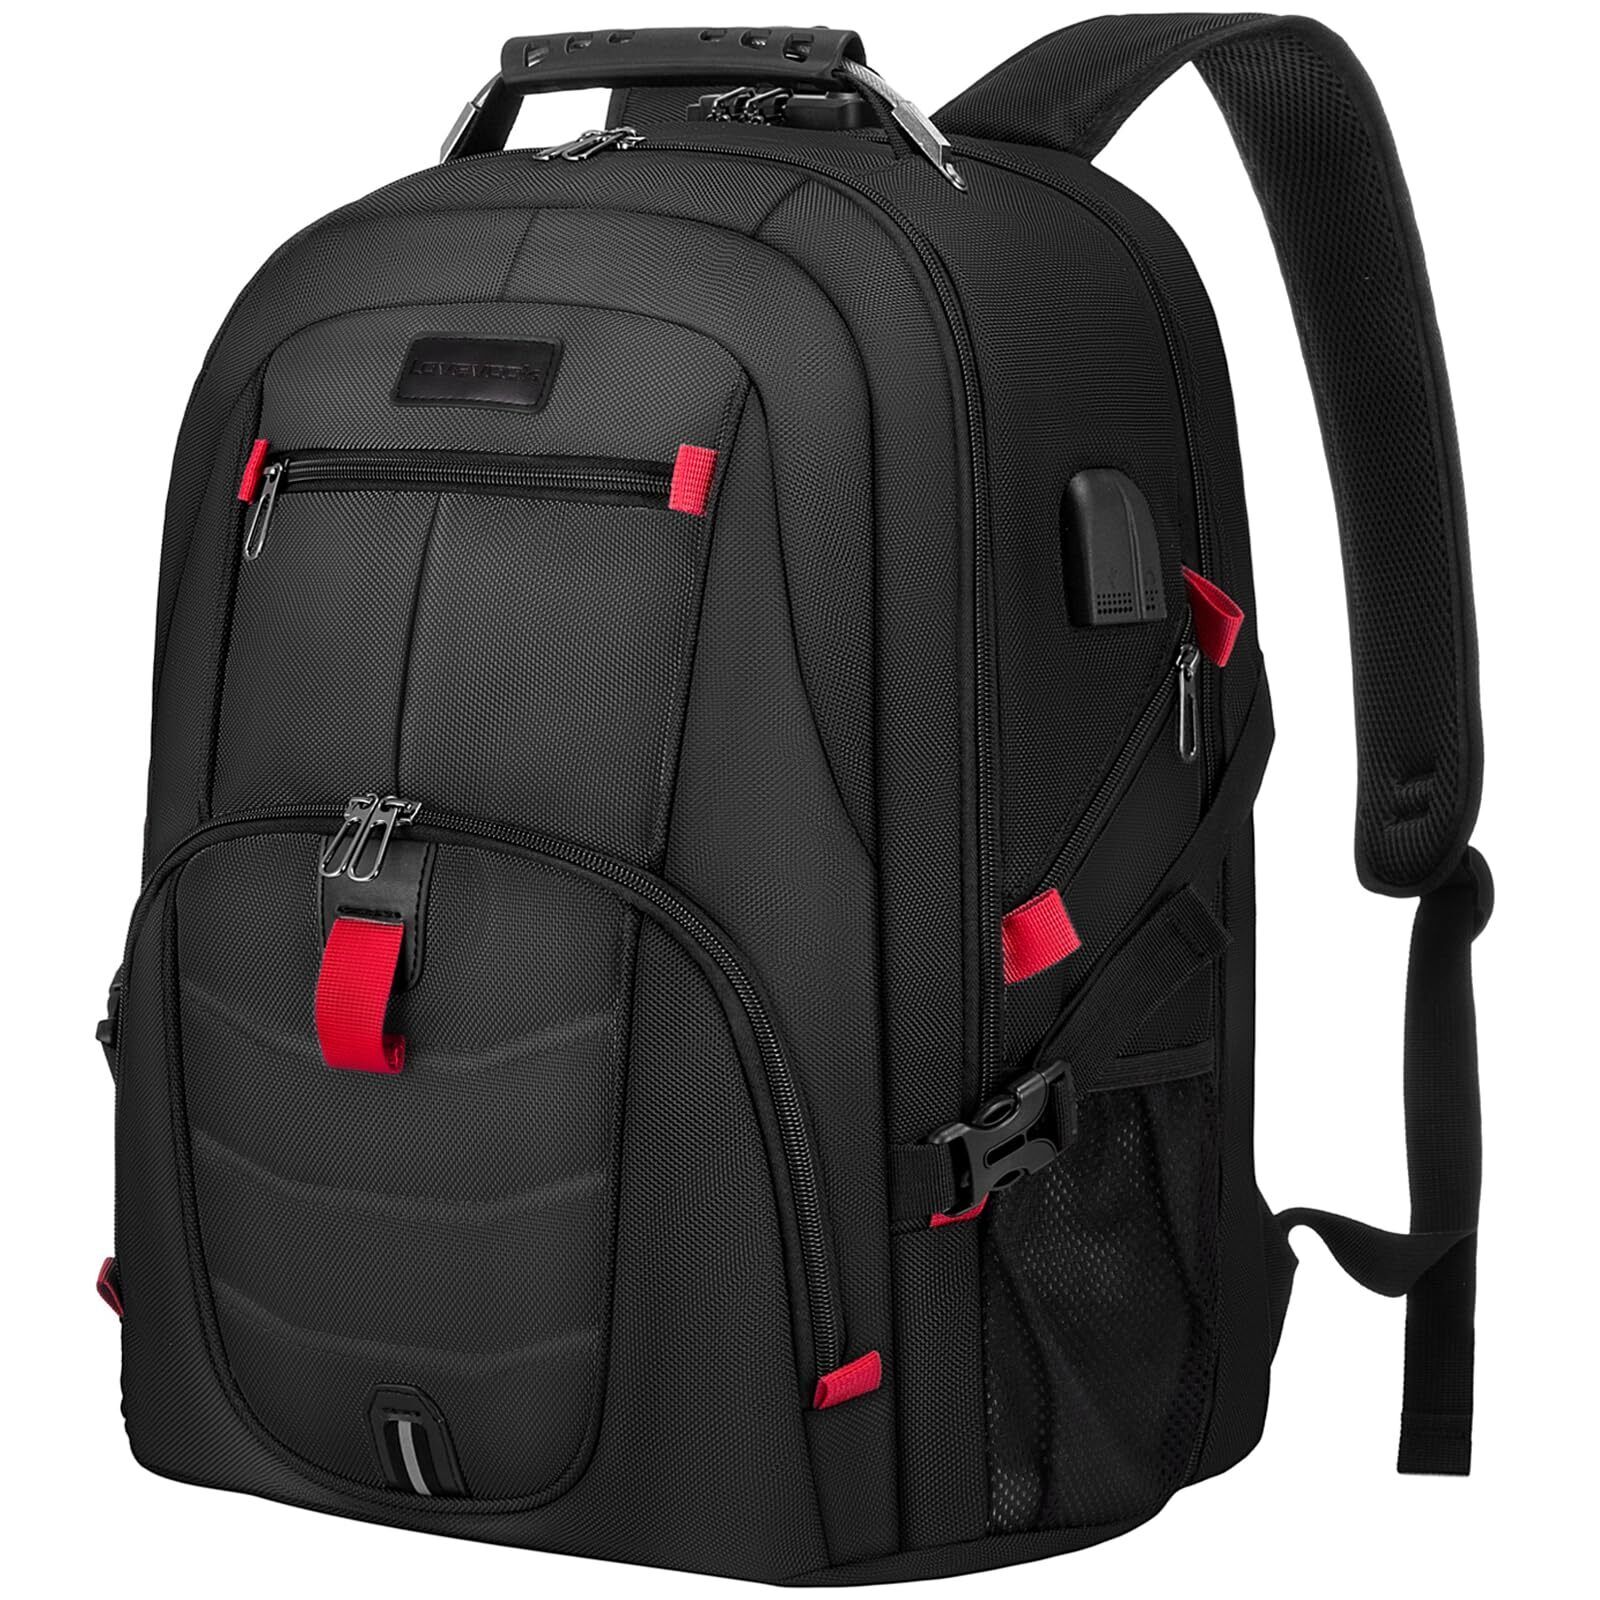 LOVEVOOK Travel Laptop Backpack Waterproof Anti Theft 17 inch, Black 